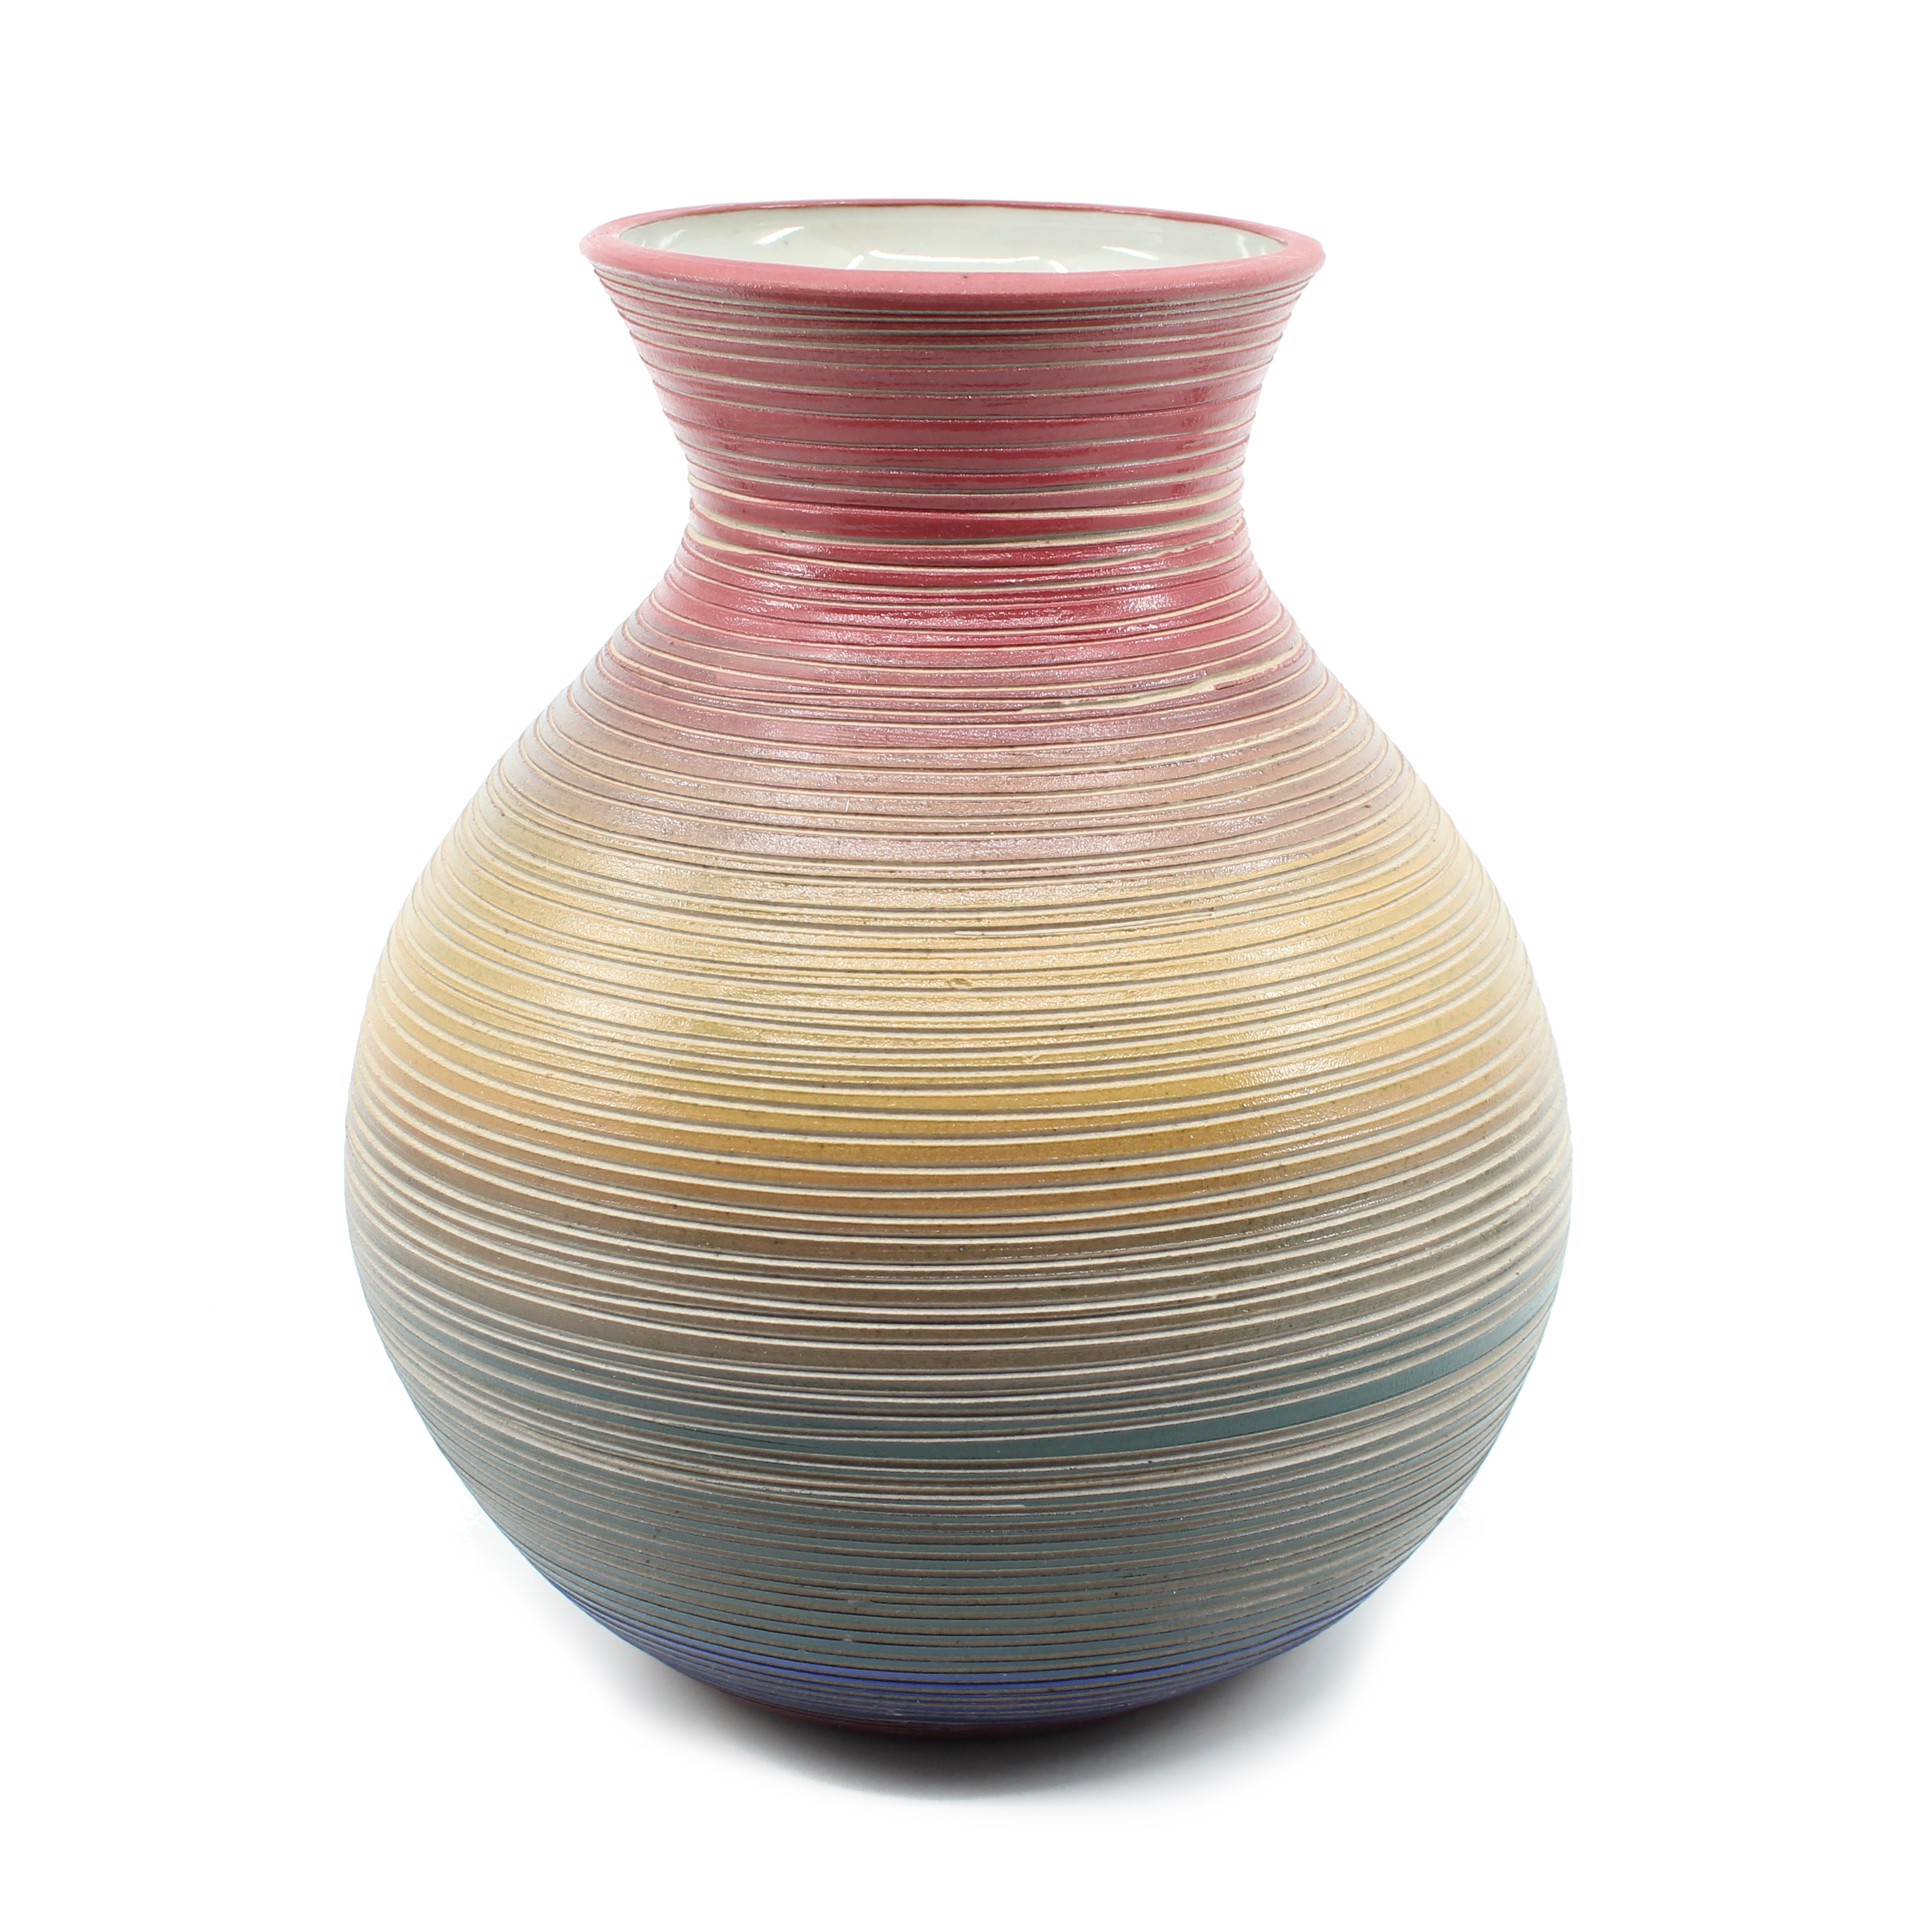 Rainbow Vase by Heather Bradley